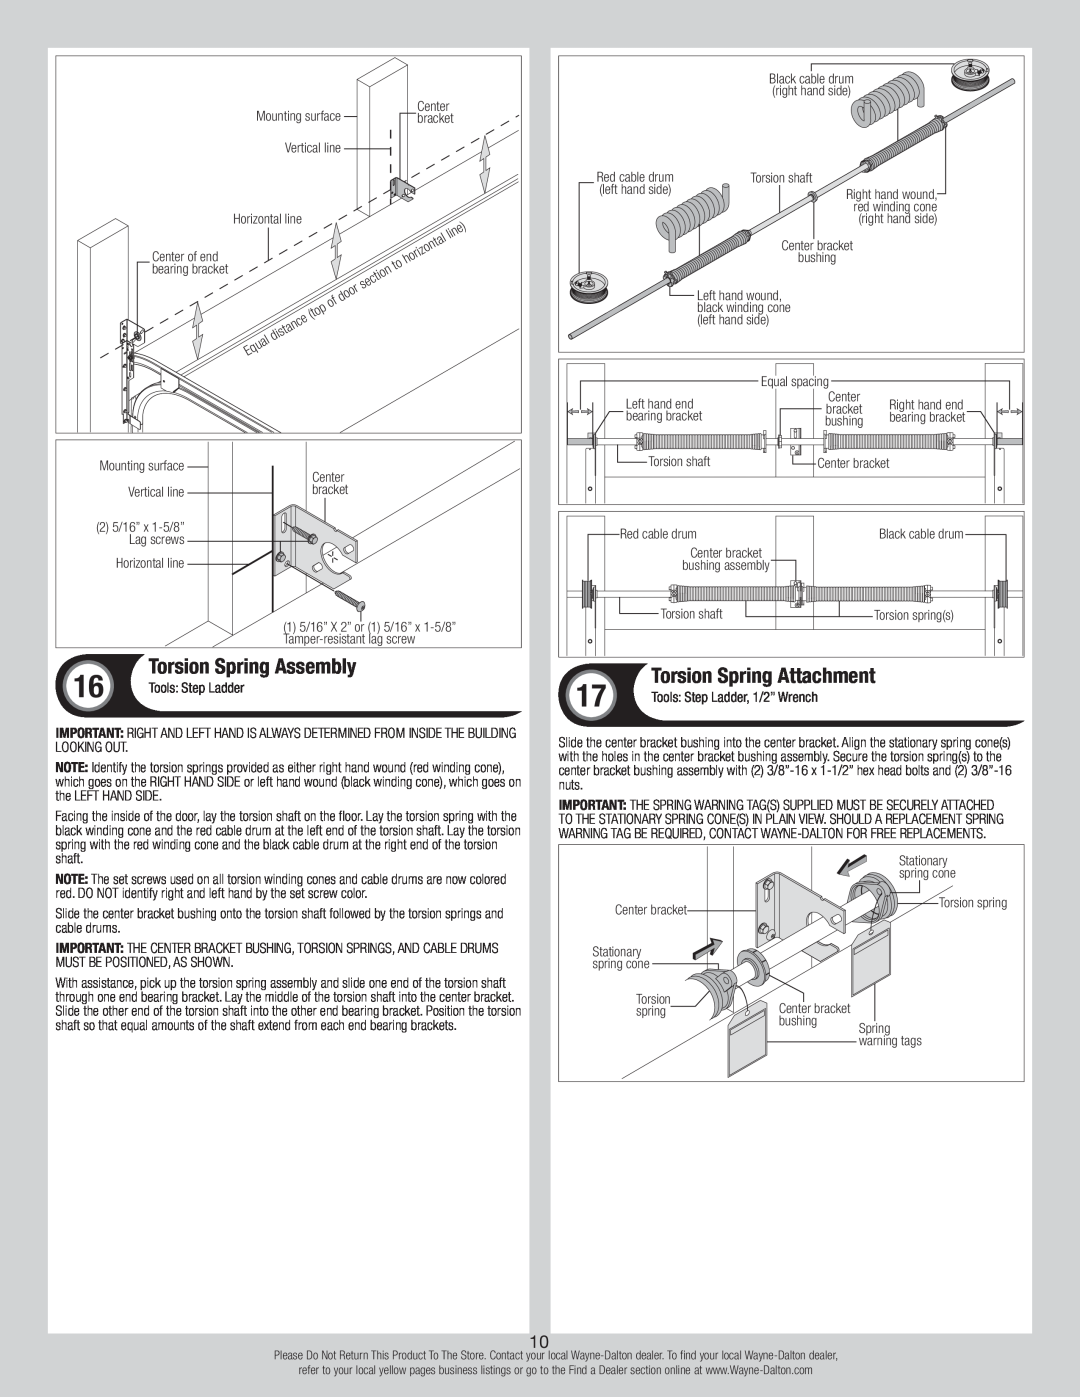 Wayne-Dalton 9800 installation instructions Torsion Spring Assembly, Torsion Spring Attachment 